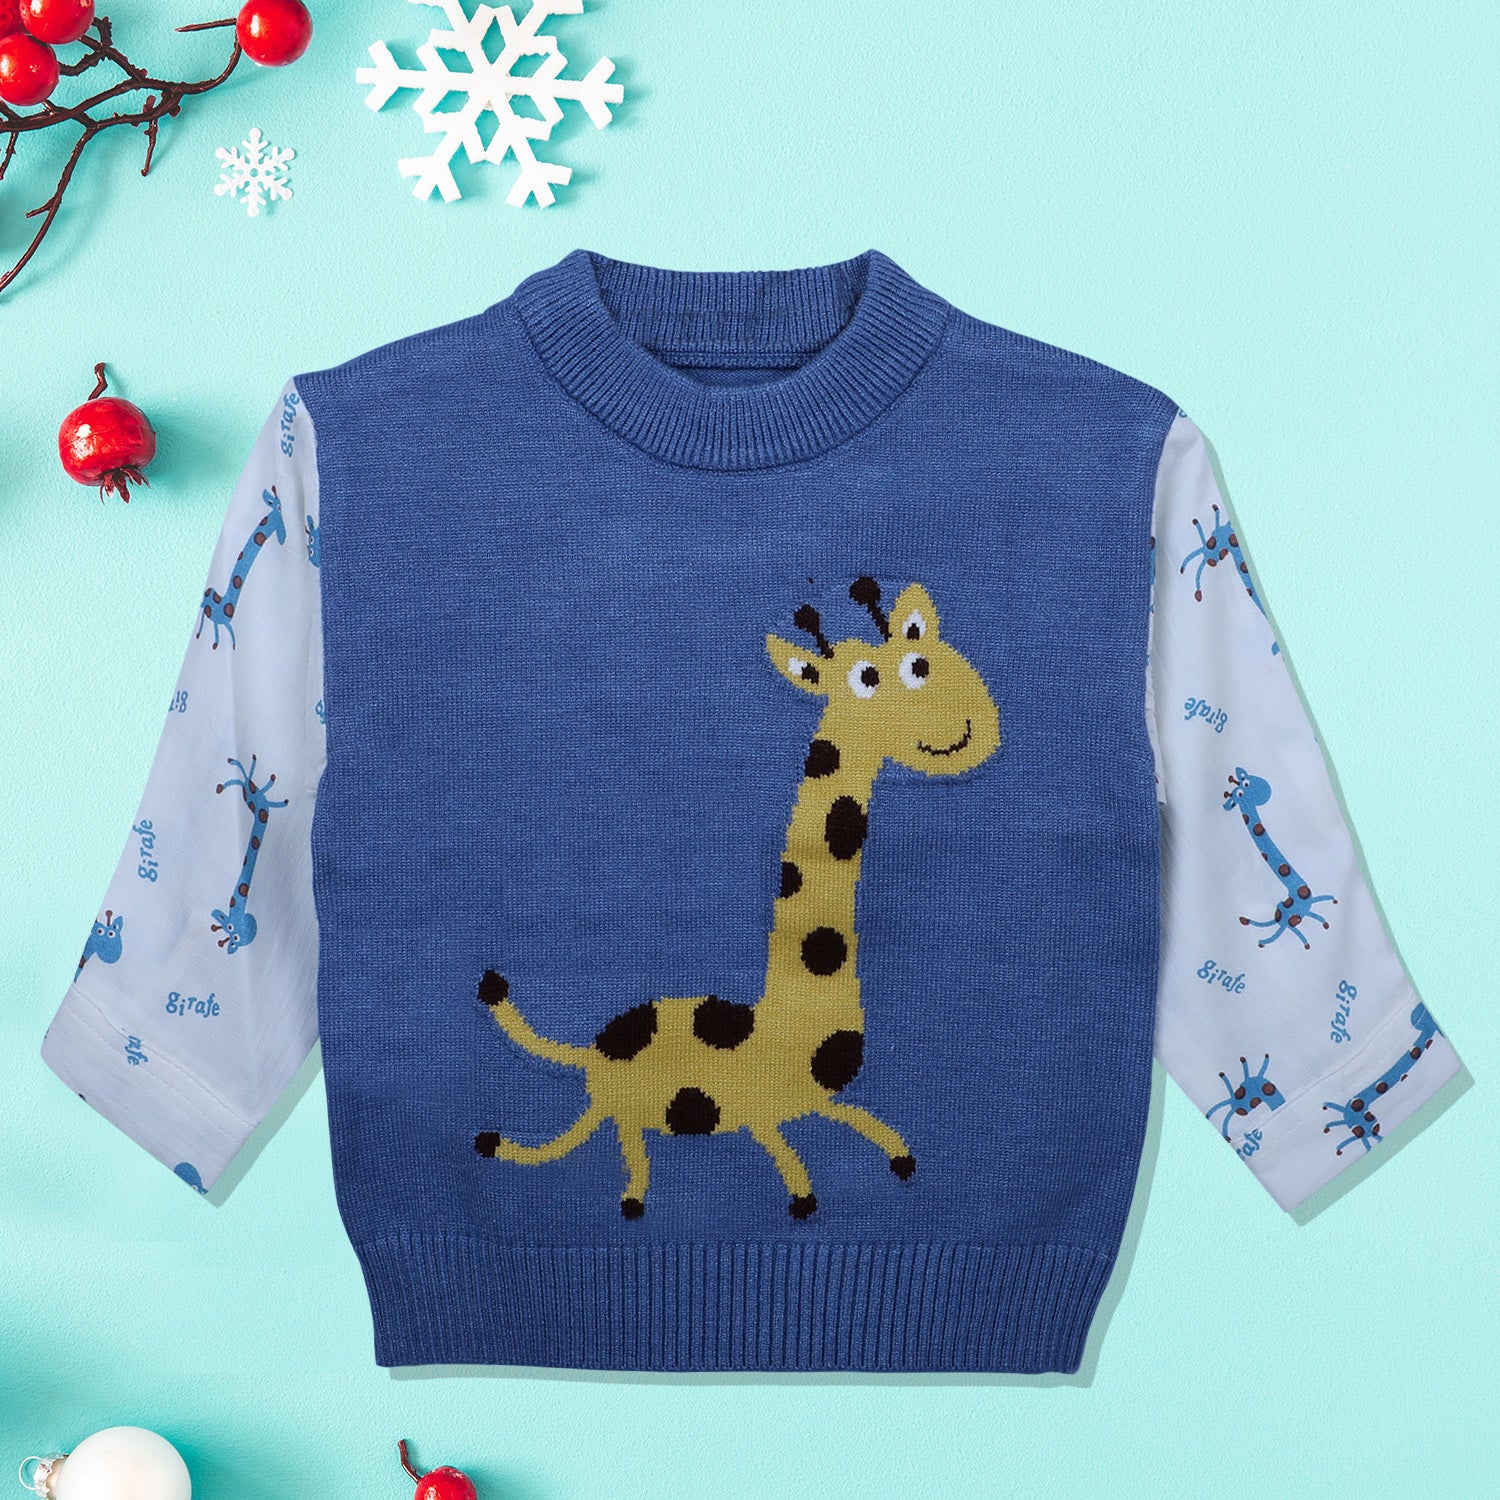 Cute Giraffe Premium Full Sleeves Knitted Sweater - Blue And White